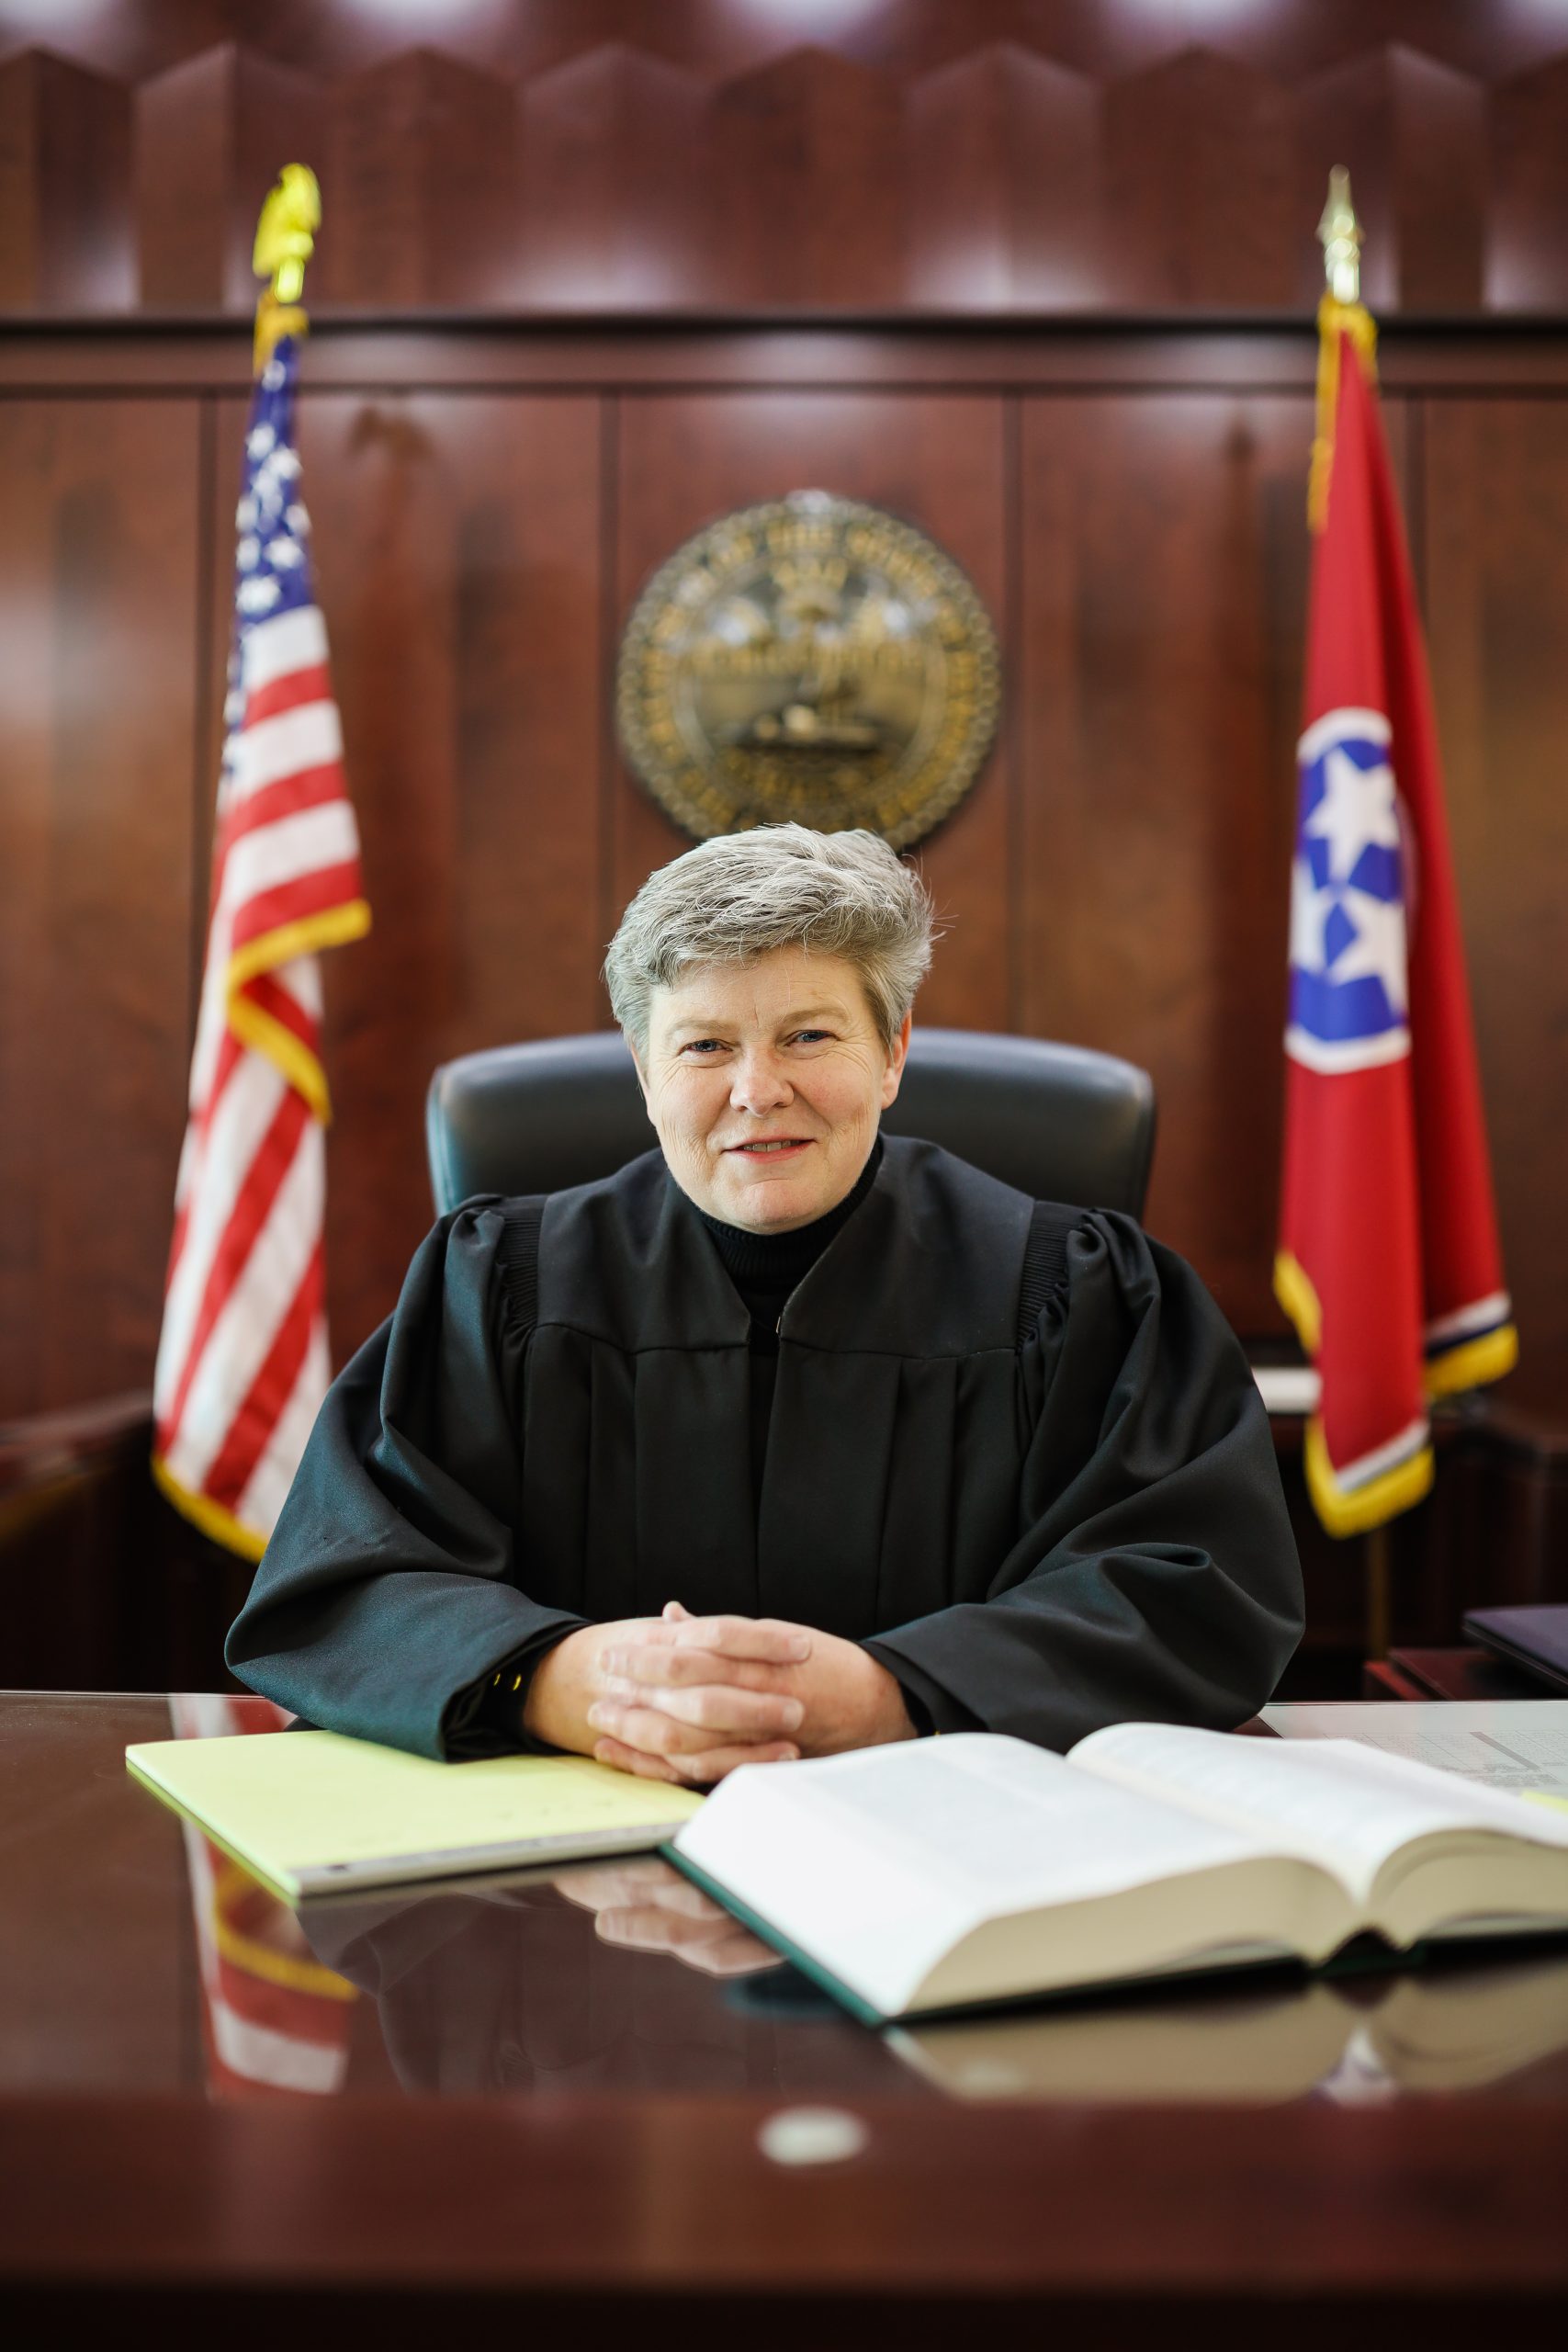 Judge Jennifer Smith